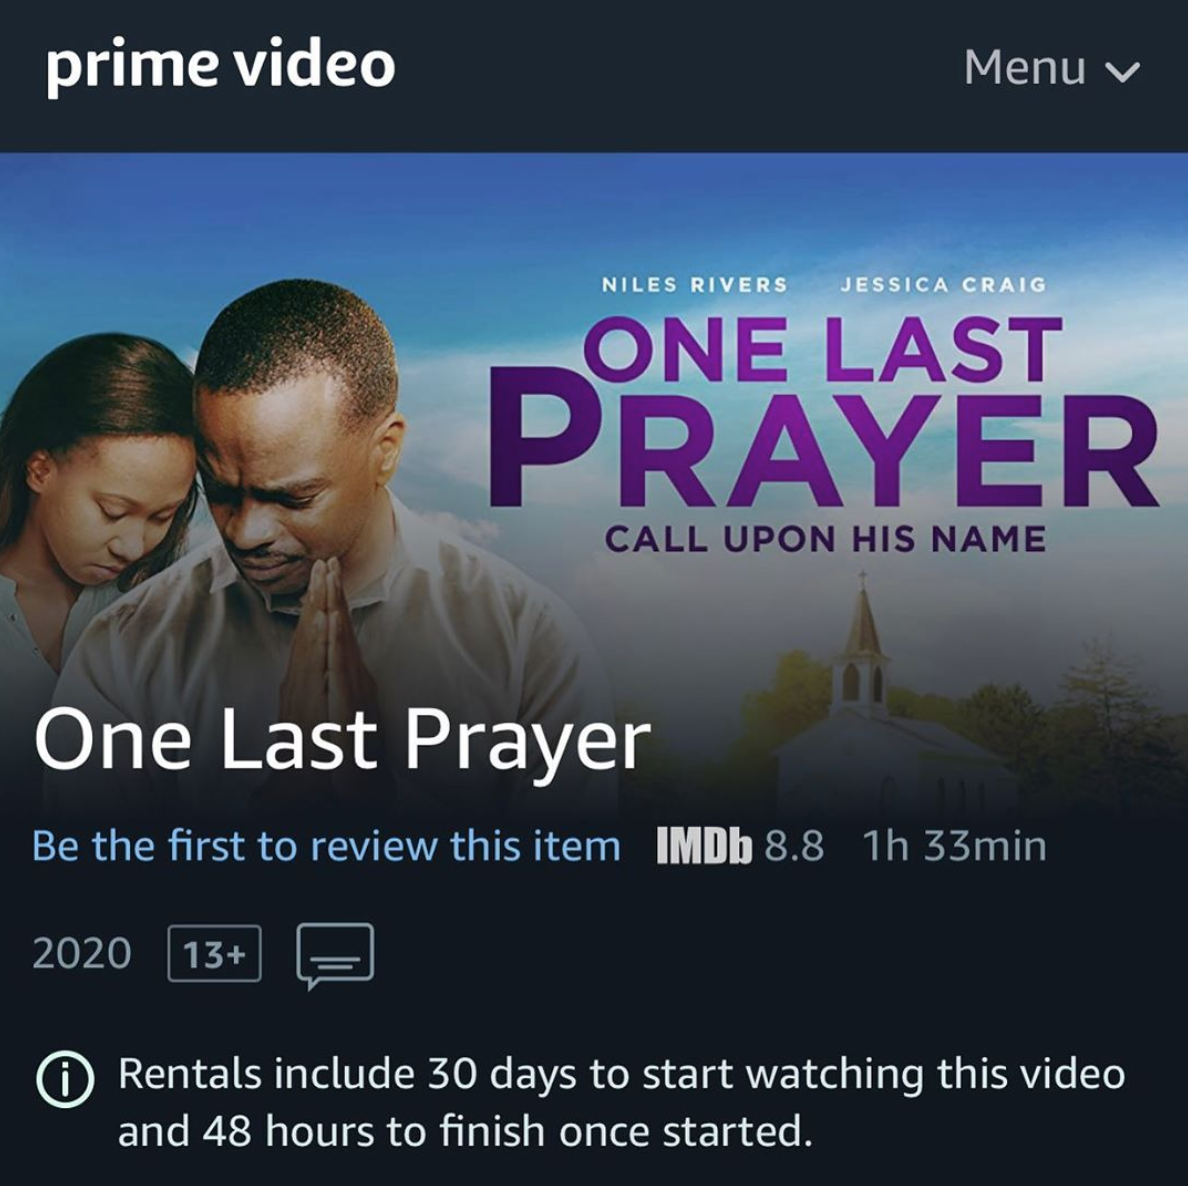 One Last Prayer on Amazon